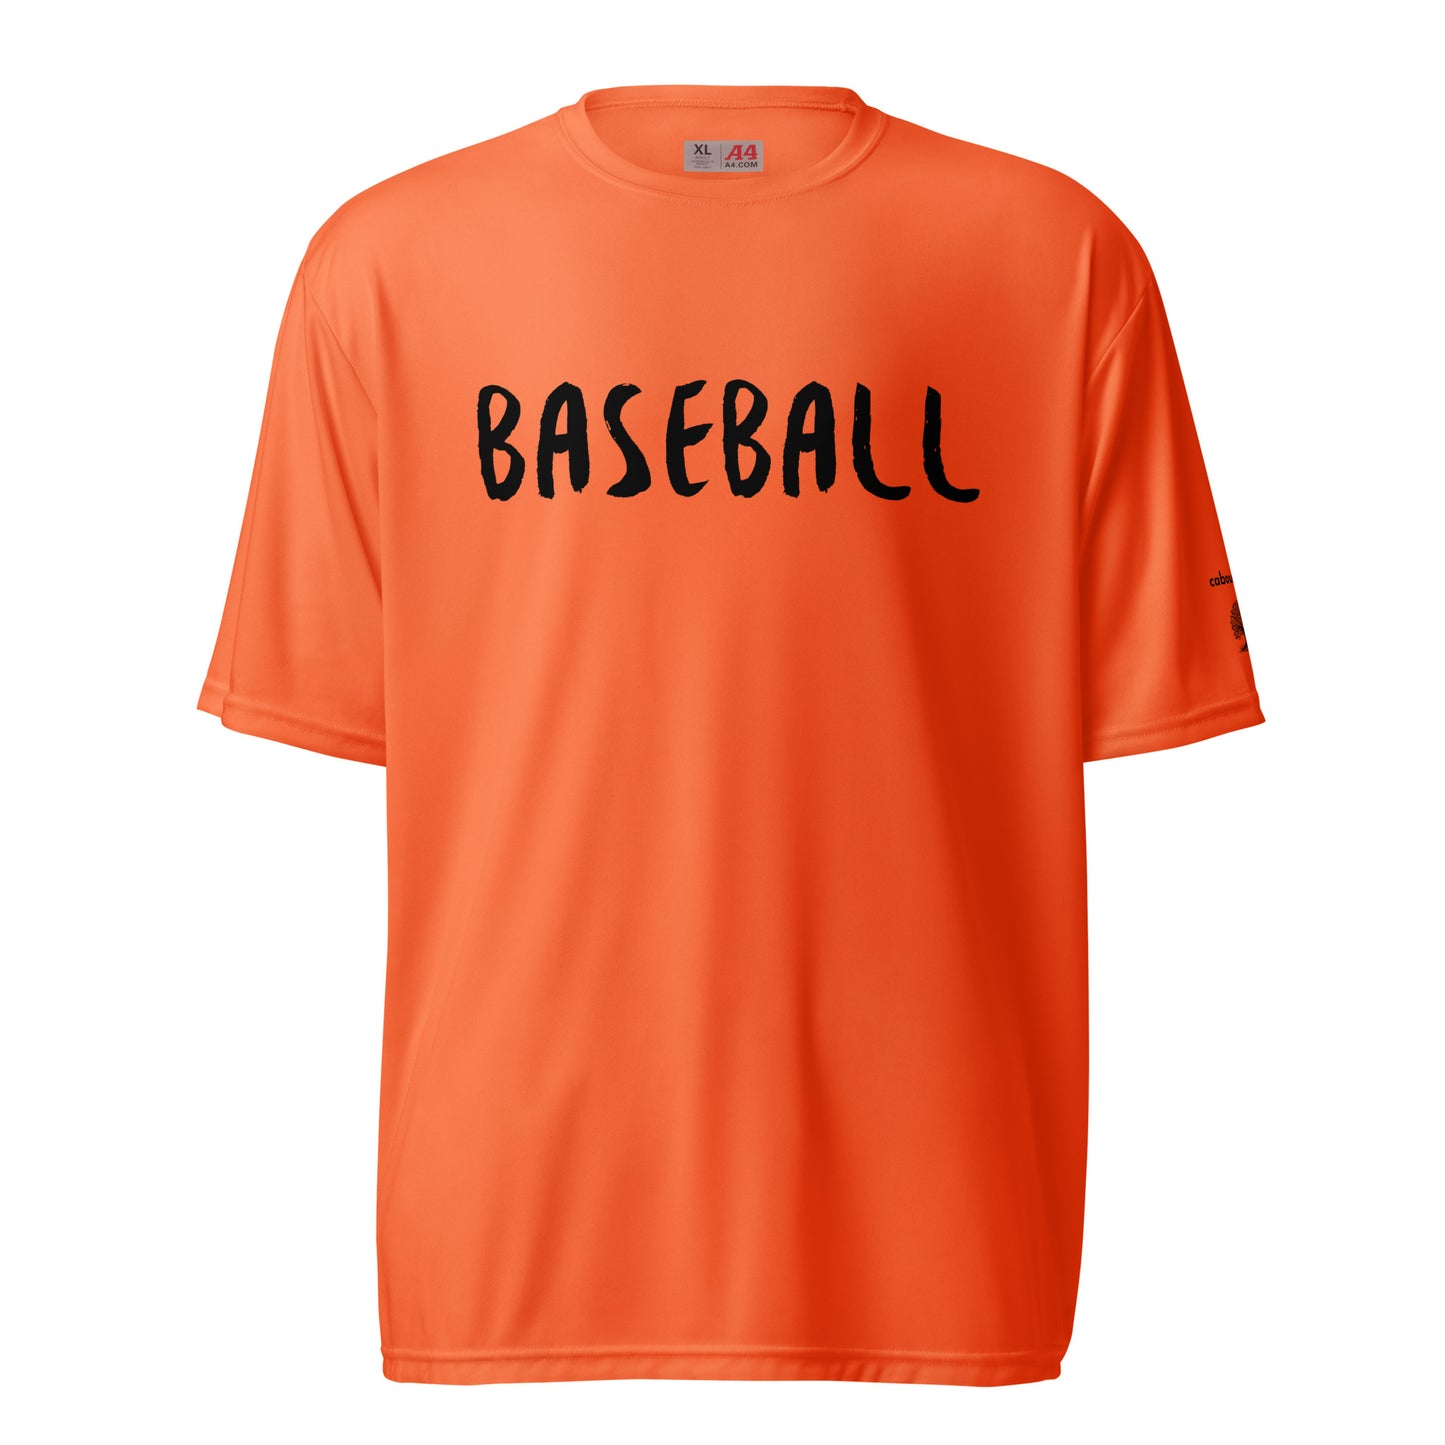 Unisex performance crew neck t-shirt - Baseball (Black)